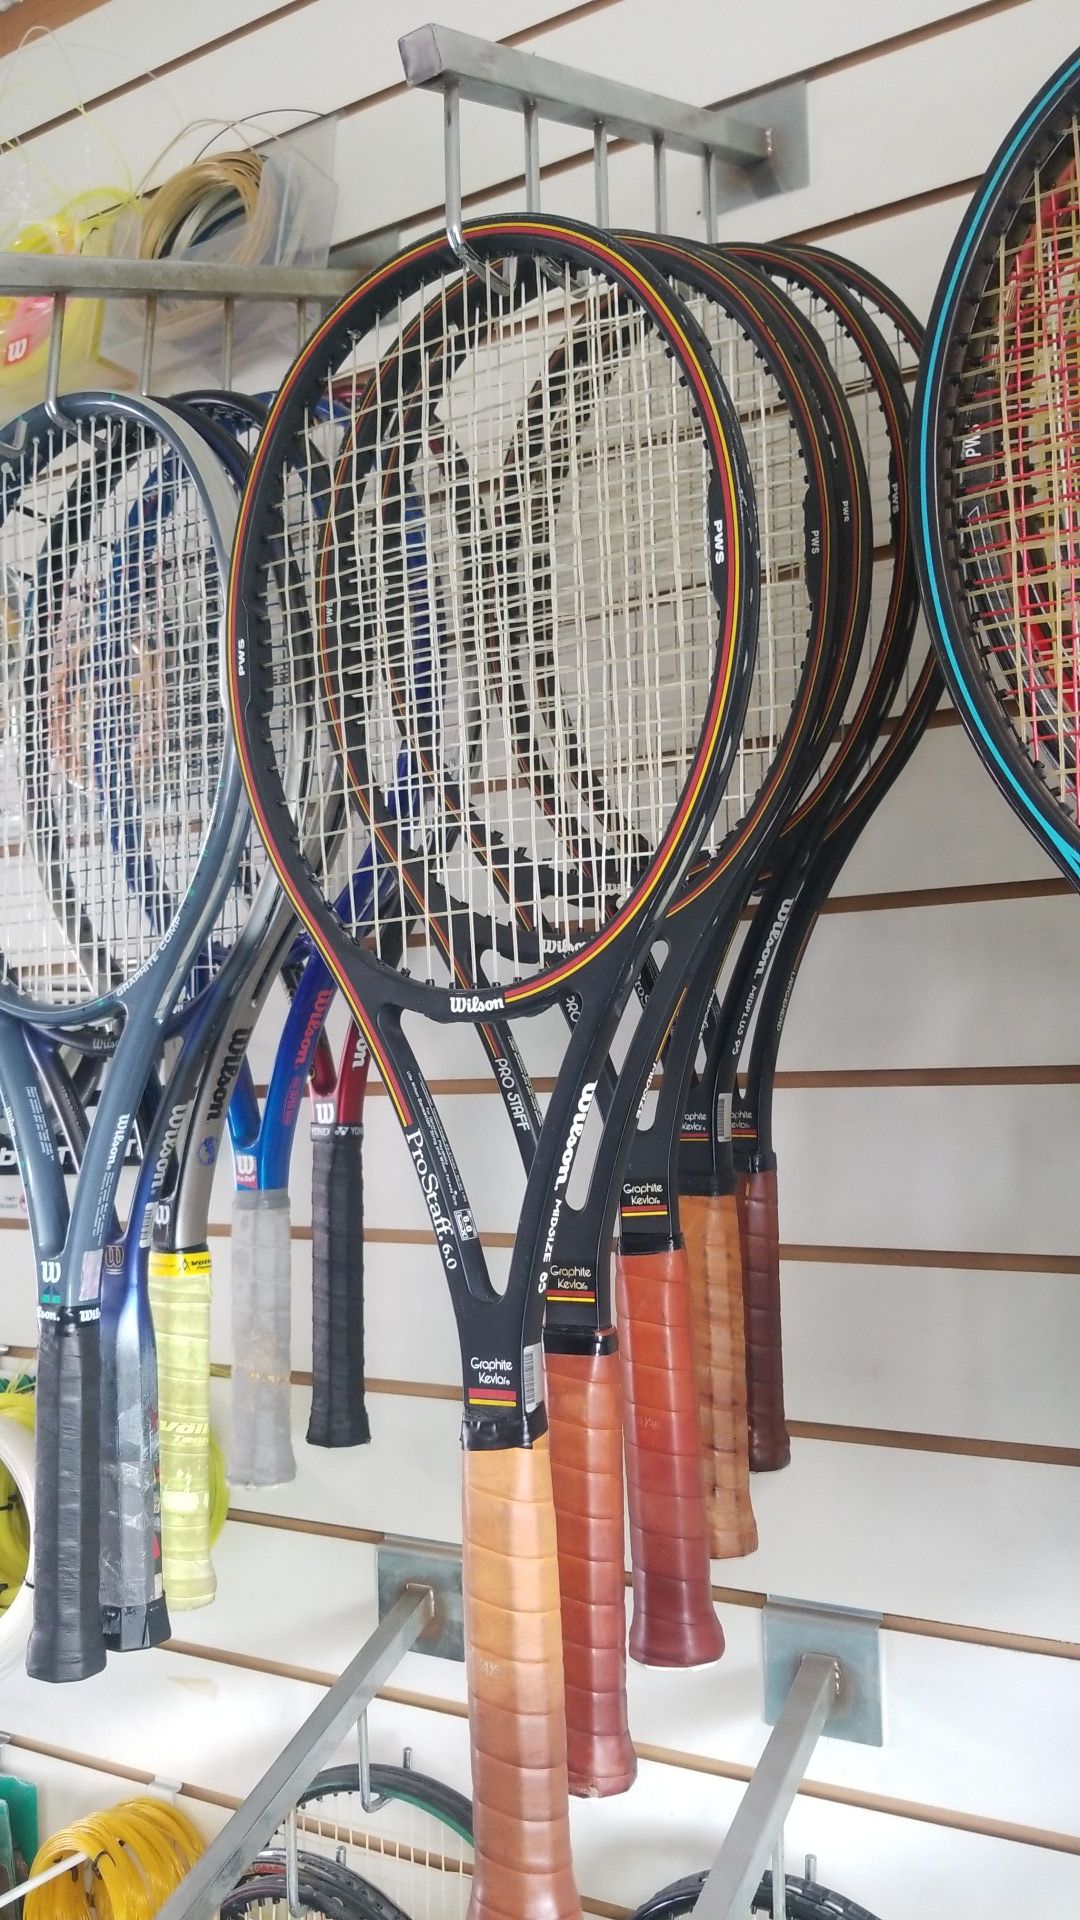 RARE. Vintage Tennis rackets